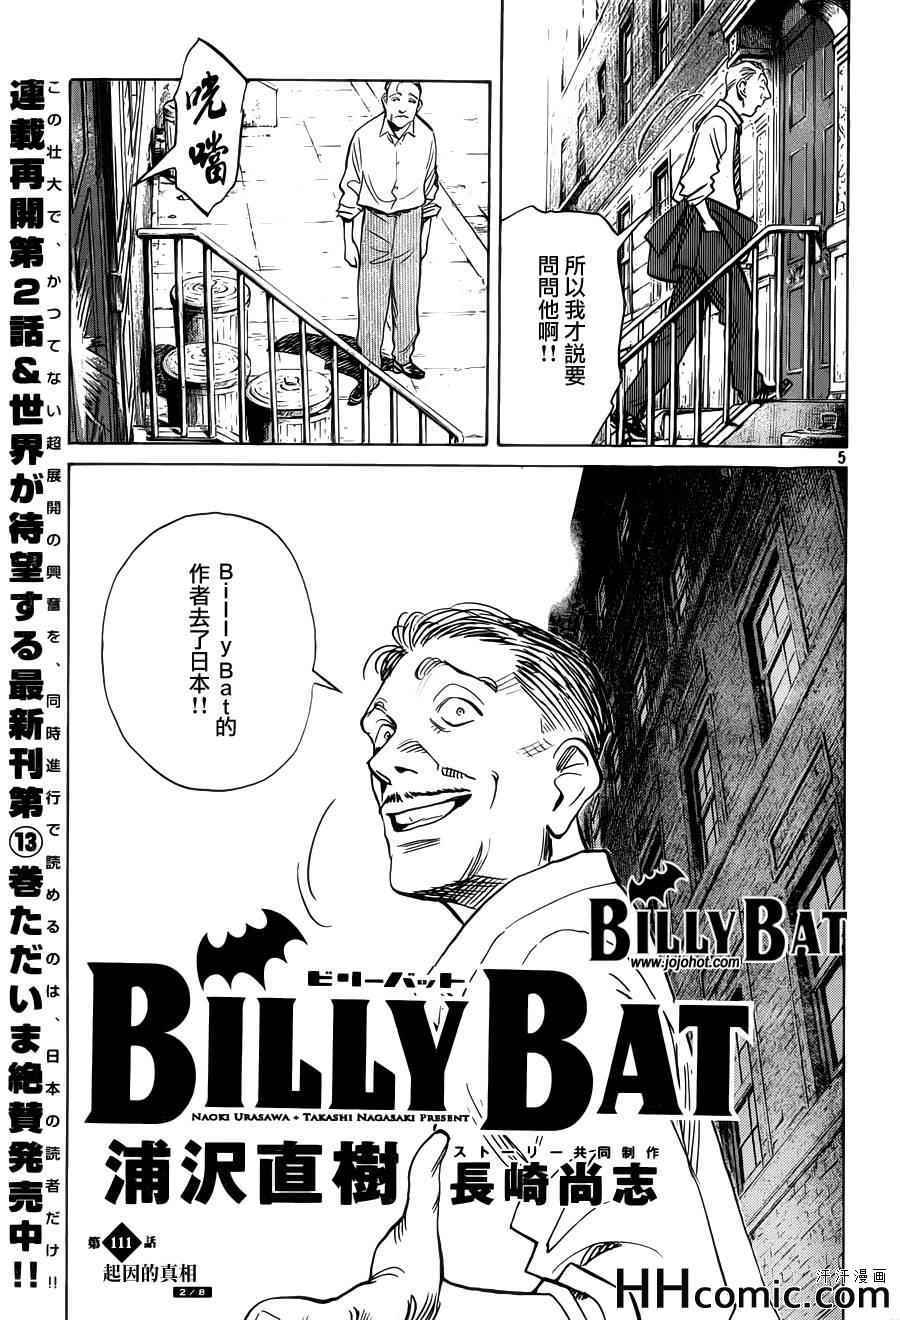 Billy_Bat - 第111話 - 5